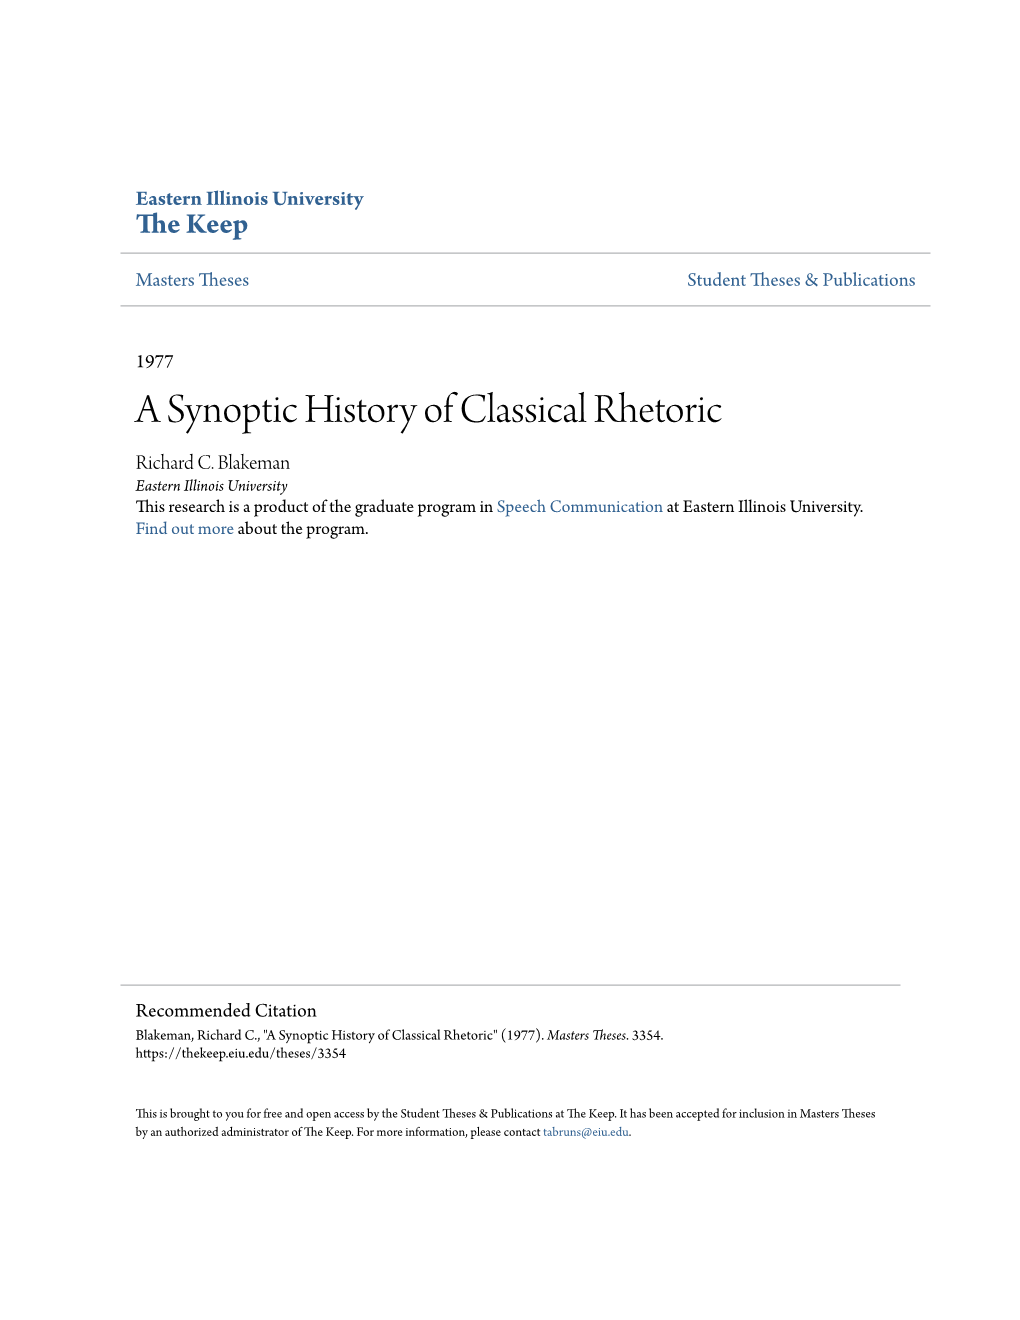 A Synoptic History of Classical Rhetoric Richard C